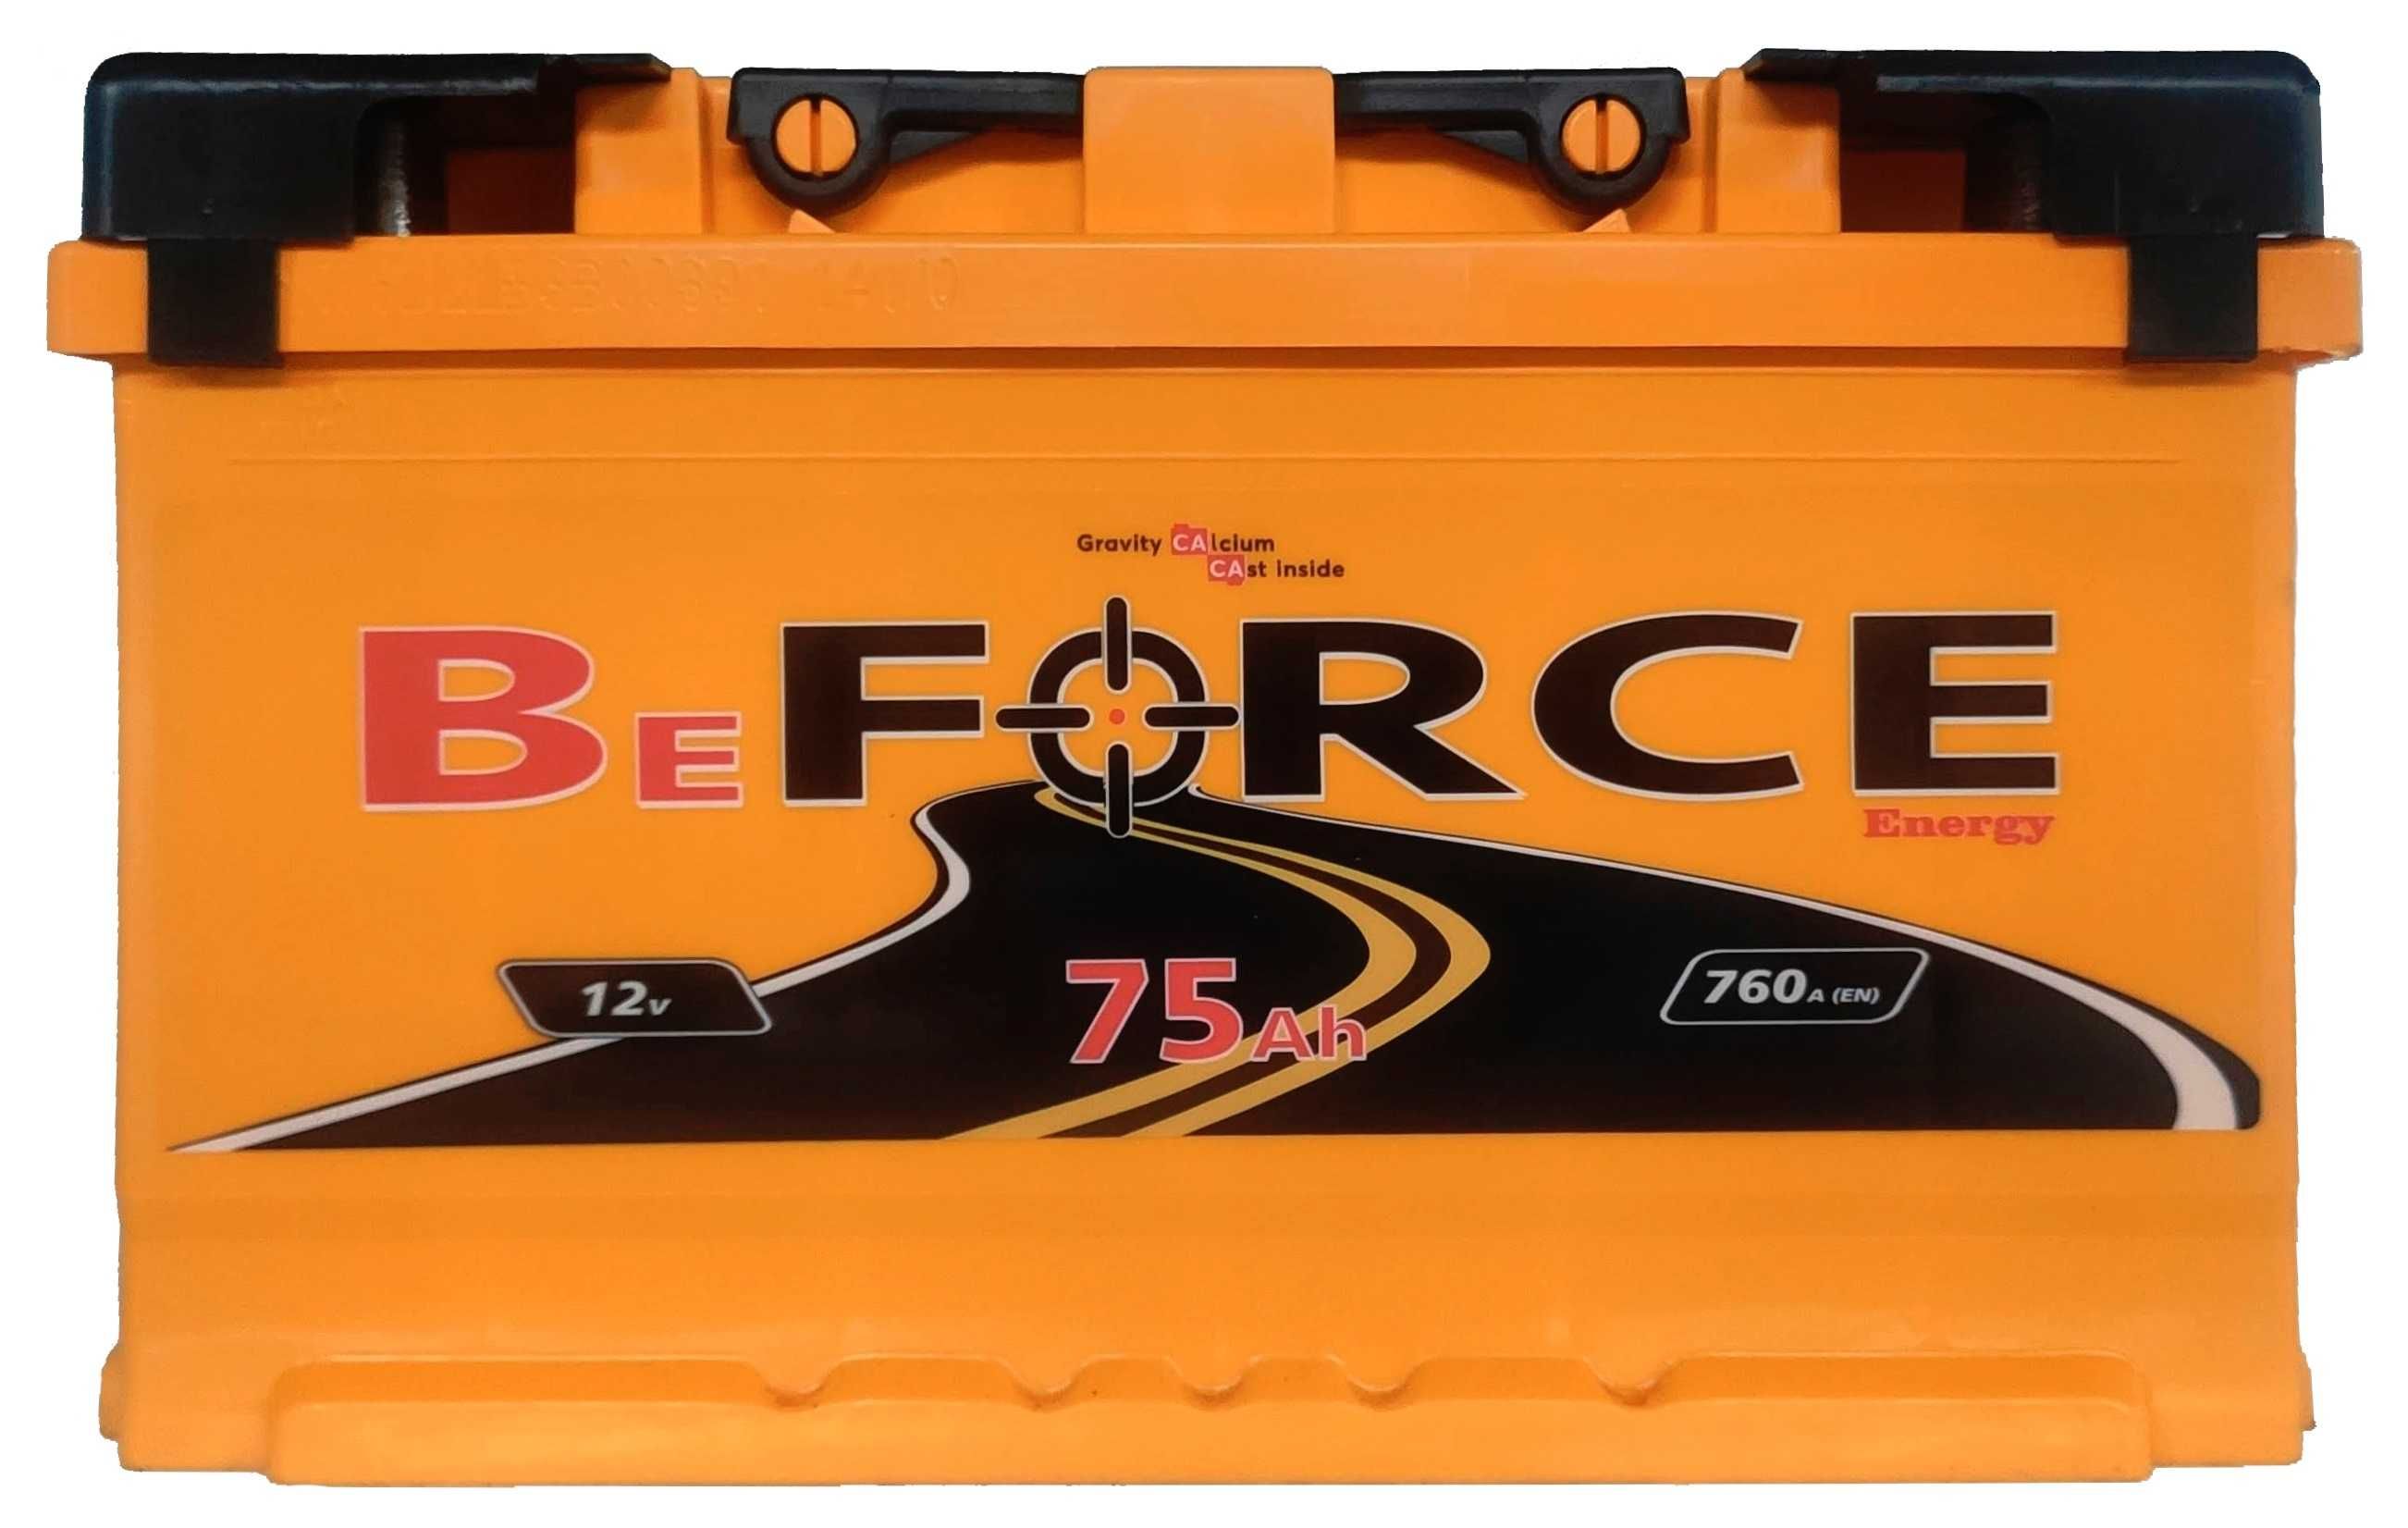 Akumulator UKRAIŃSKI Beforce 12v 75ah 760a P+ Radom wysyłka